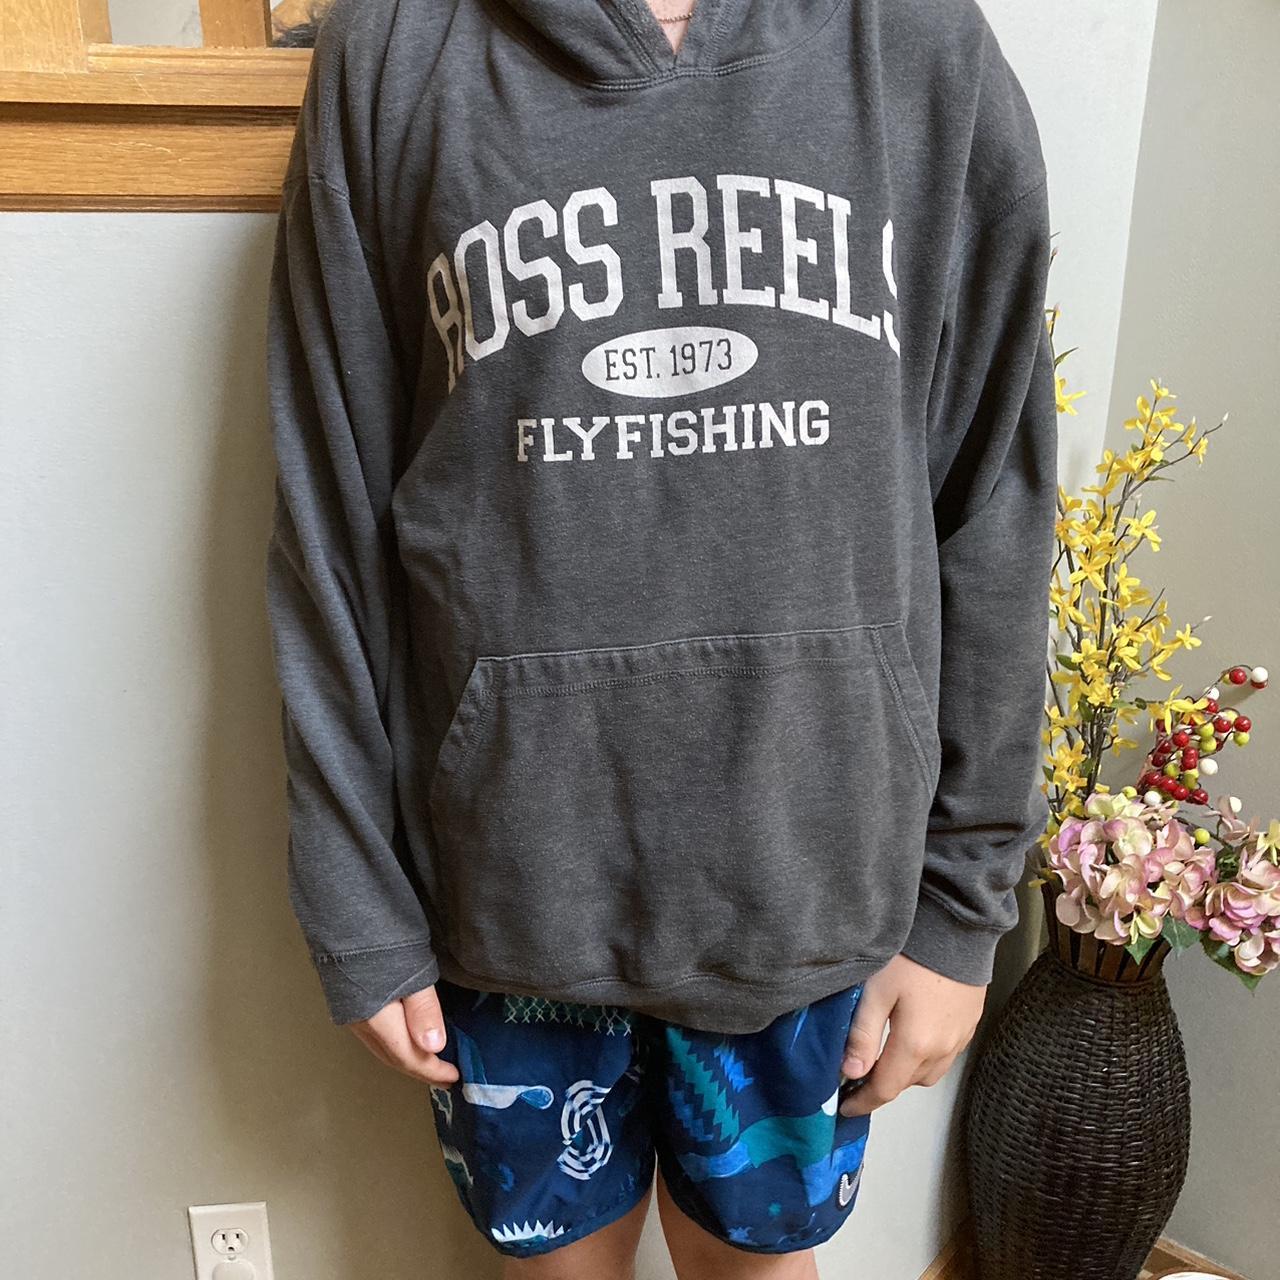 Ross reels fly fishing dark gray, hoodie size